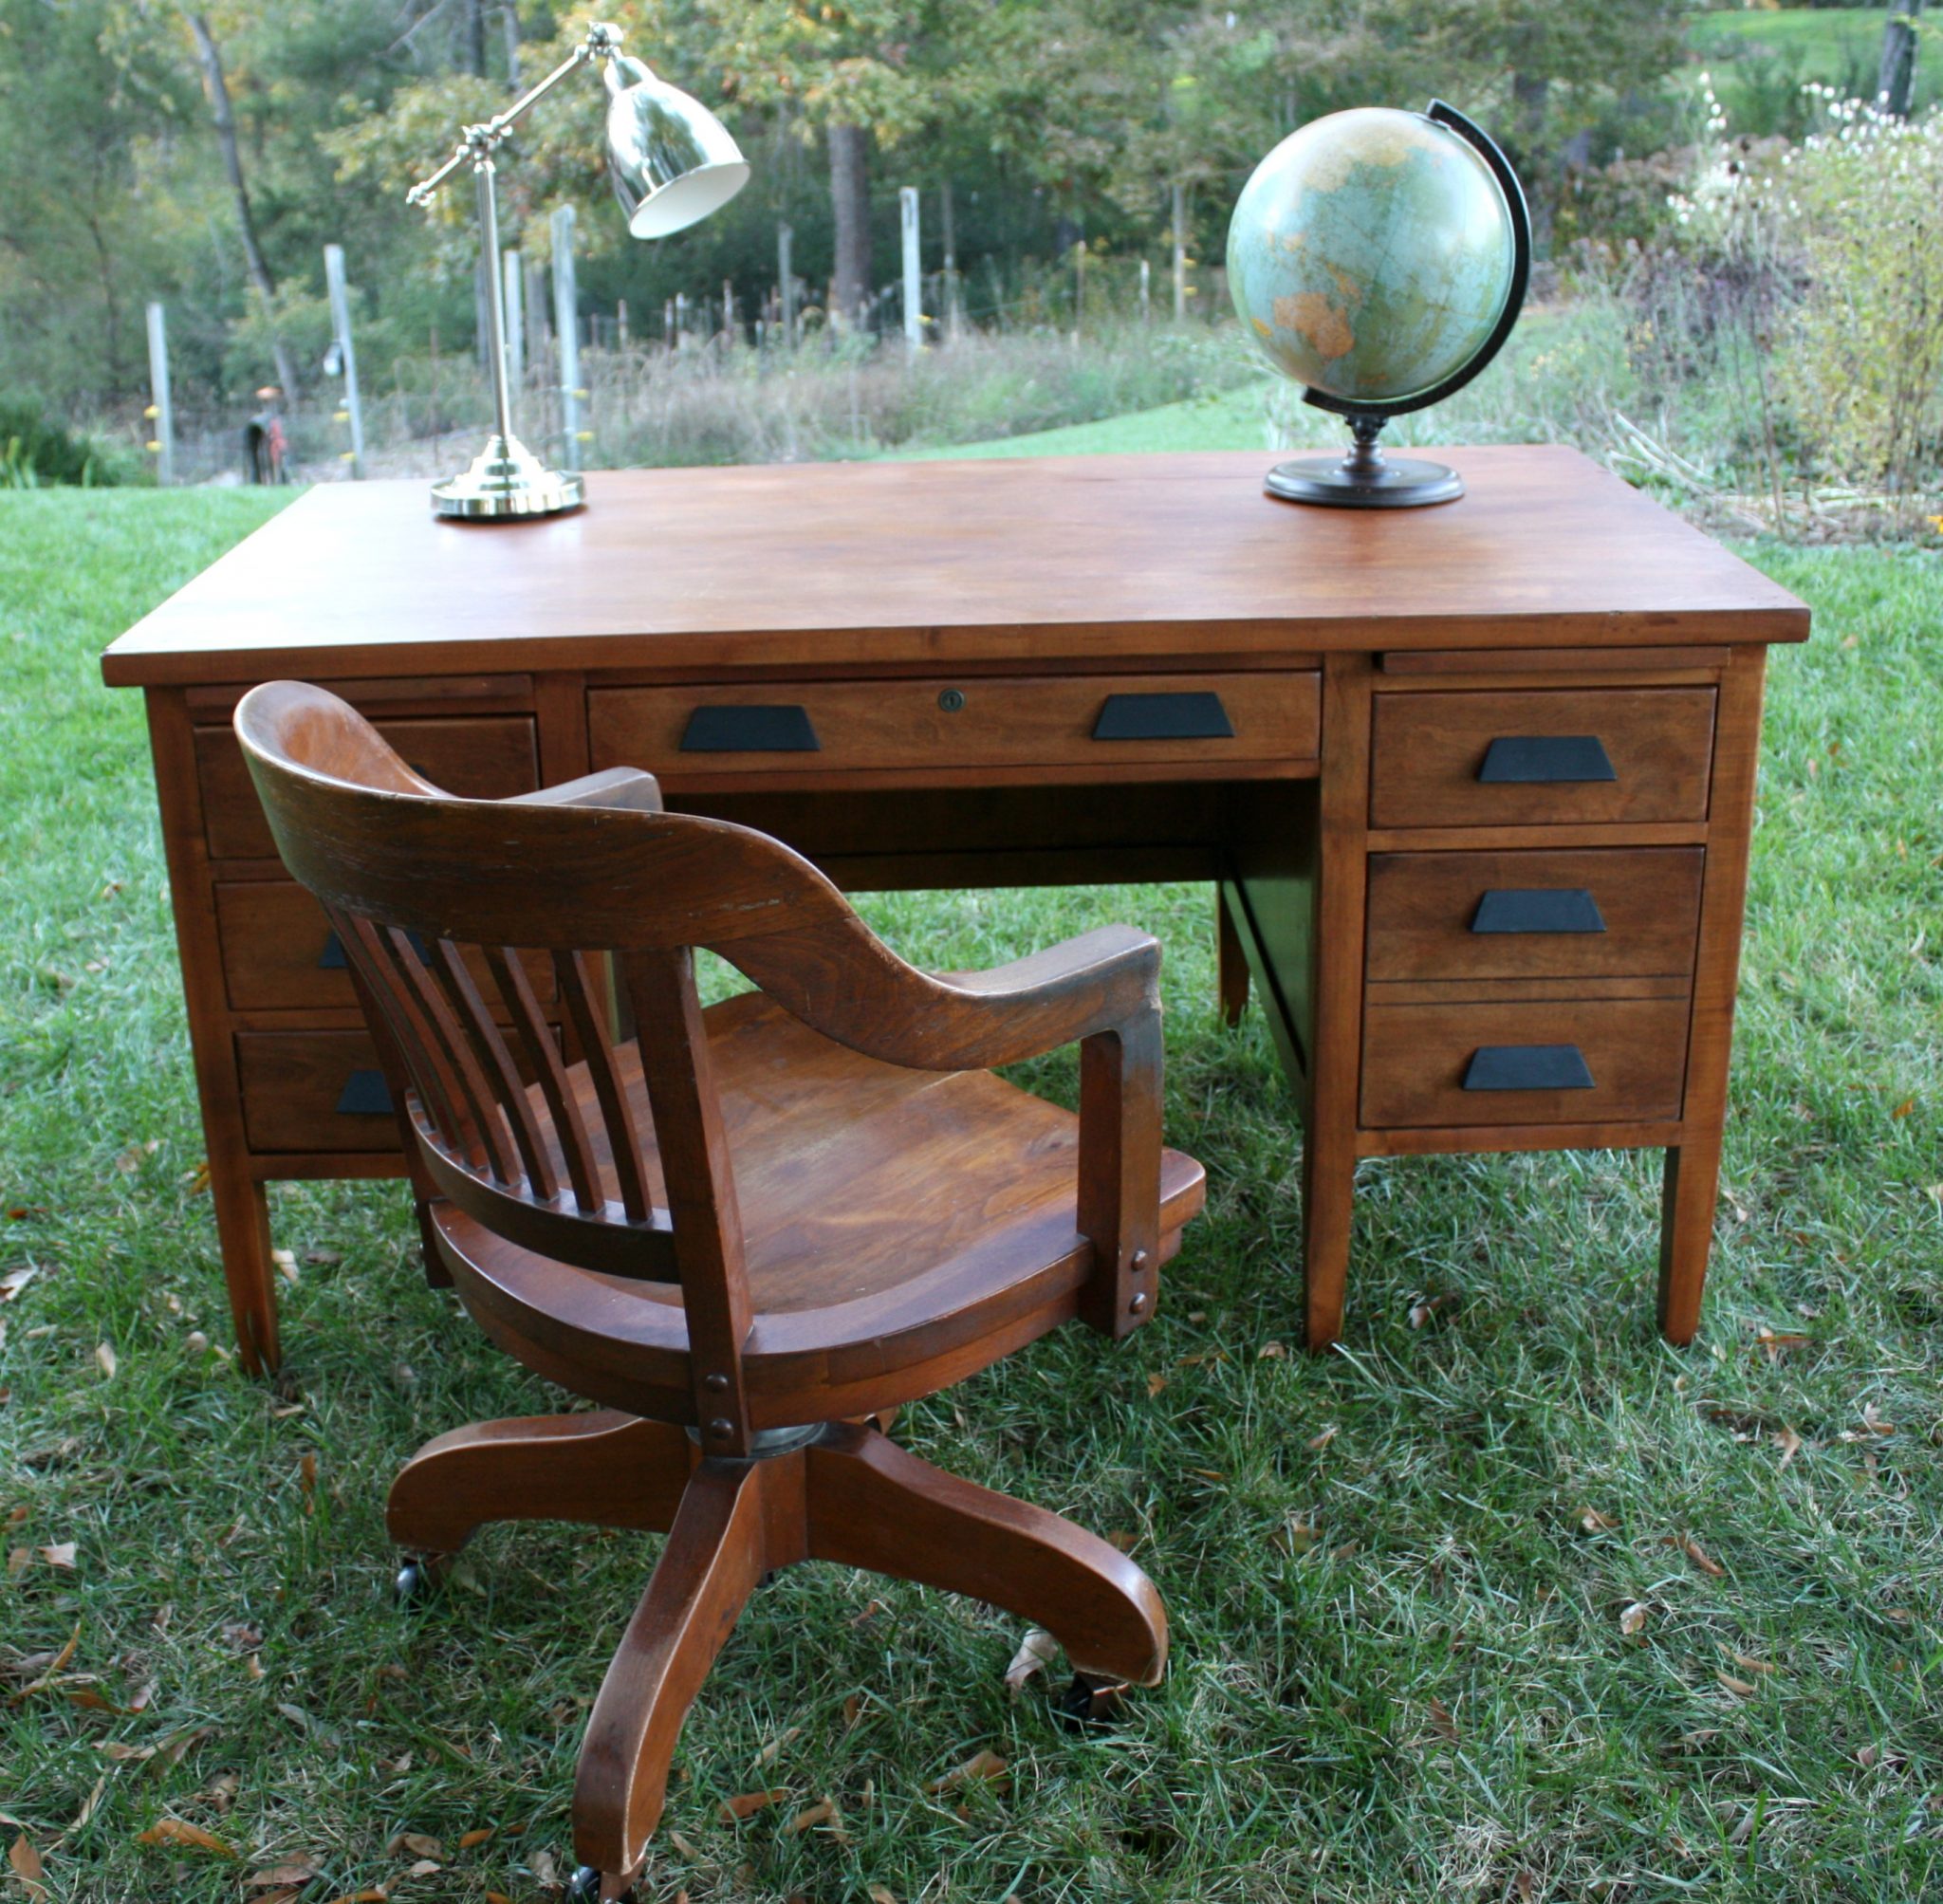 Refinished vintage teacher's desk and vintage office chair